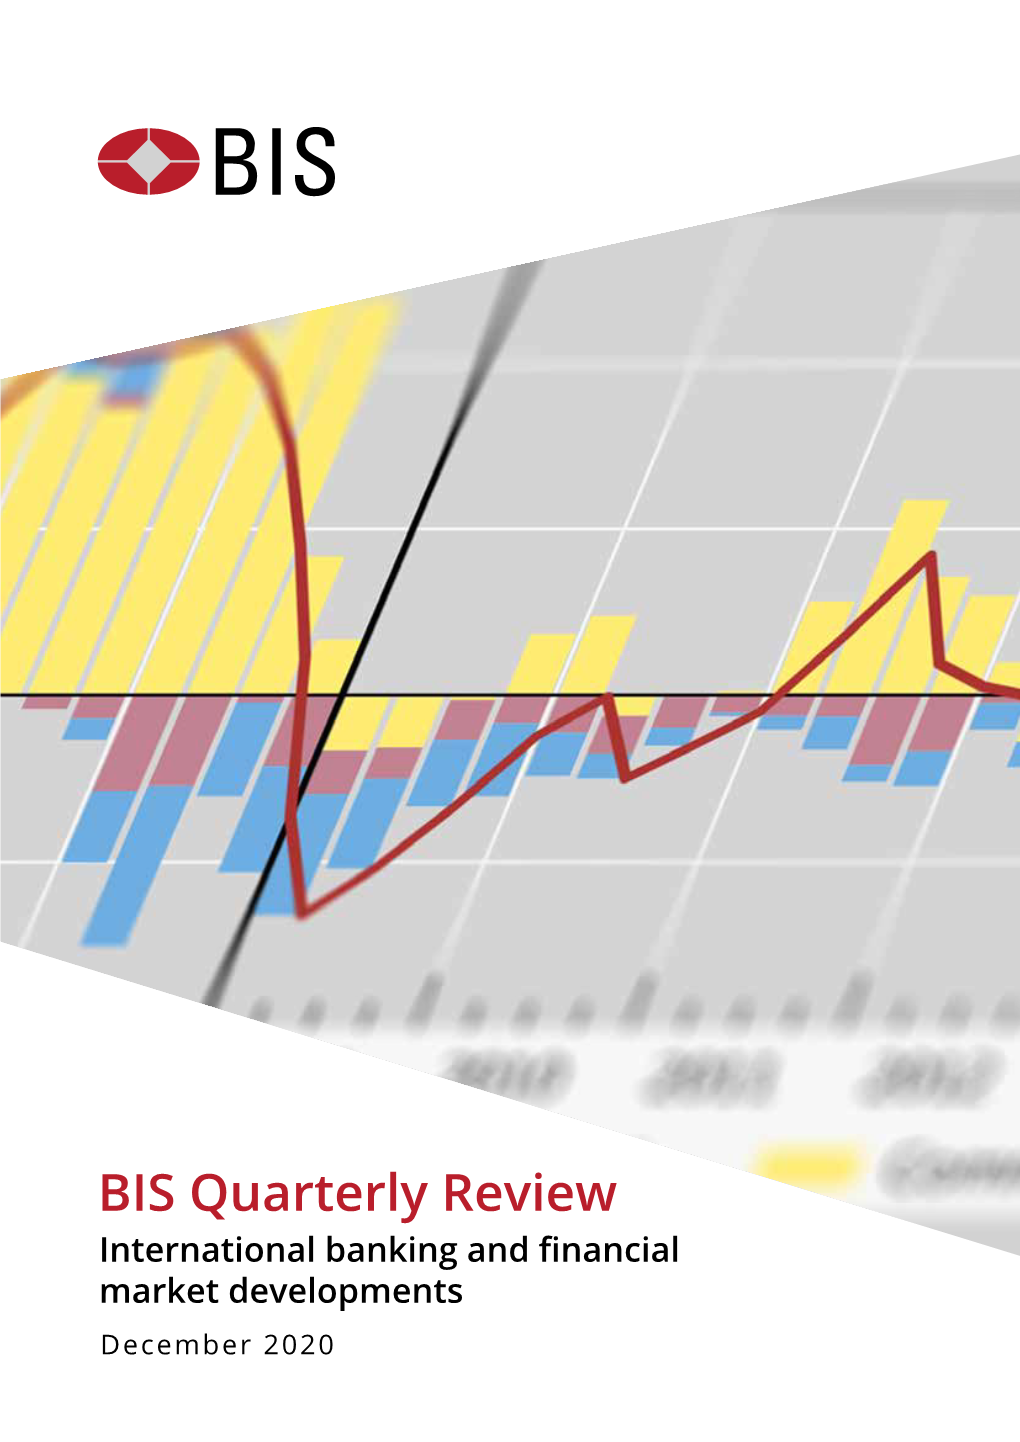 BIS Quarterly Review International Banking and Financial Market Developments December 2020